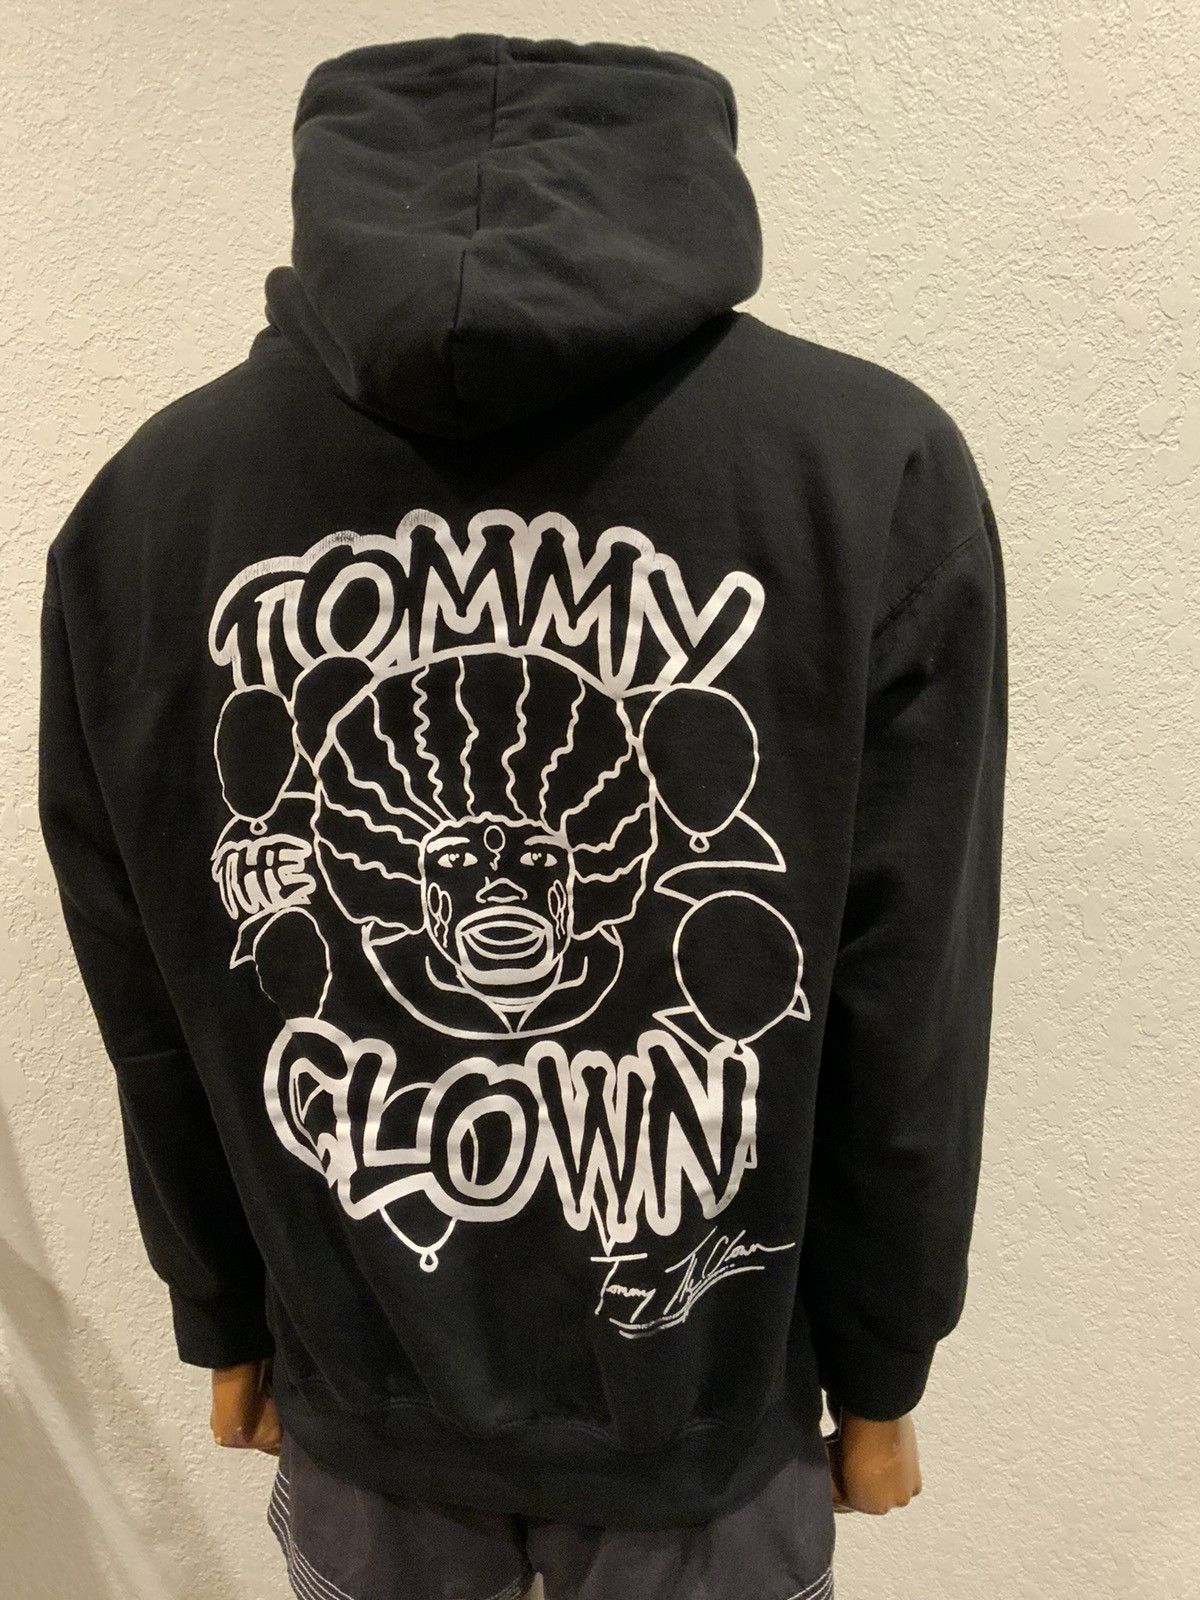 Streetwear Tommy The Clown Krumping Hip Hop Street Dance 2 Sided Hoodie Size US L / EU 52-54 / 3 - 11 Preview